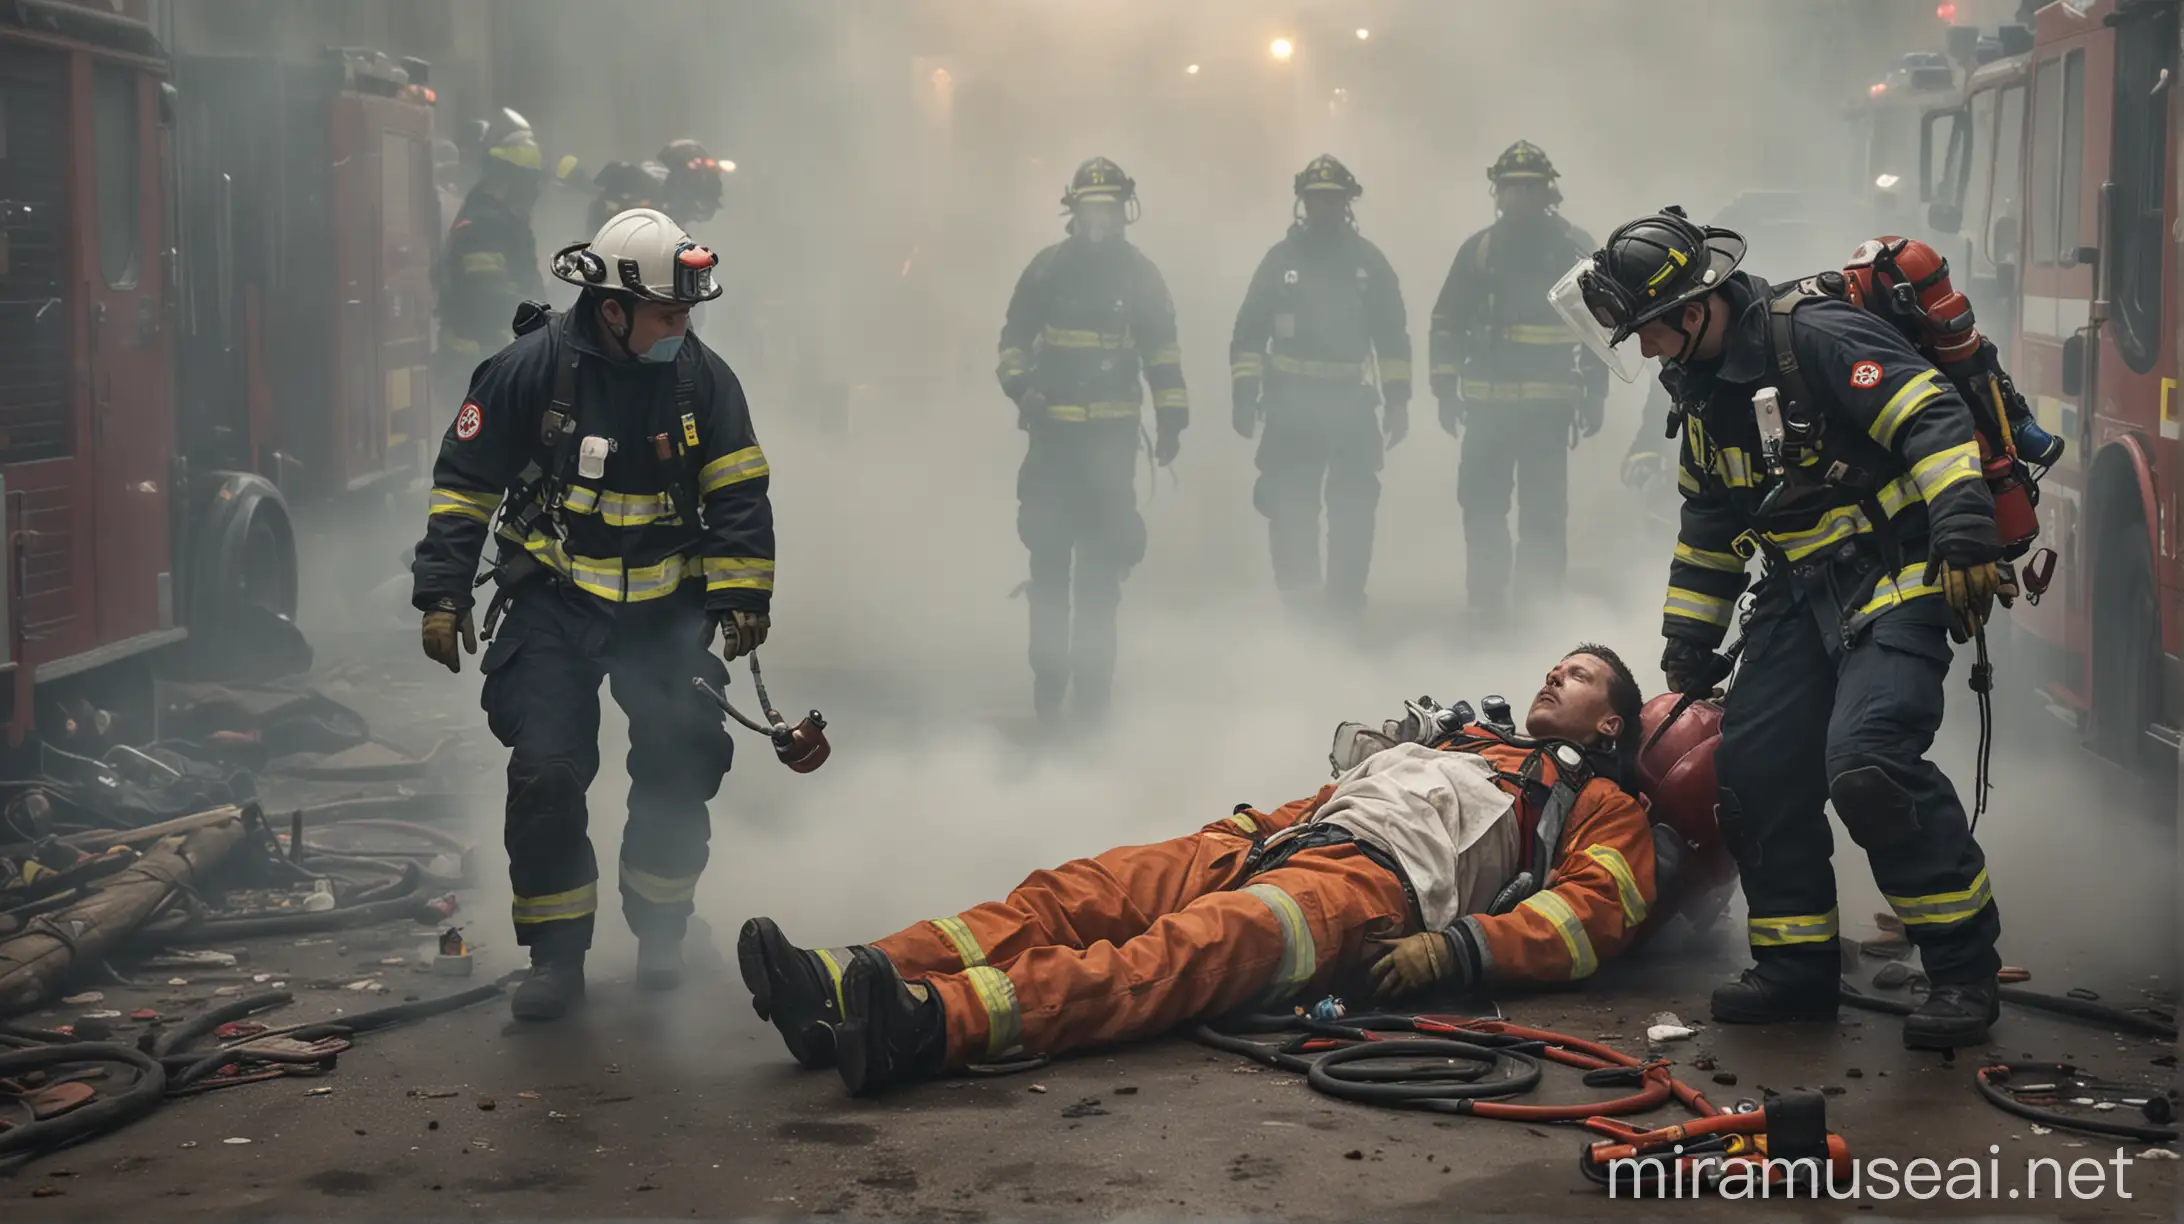 Emergency Medical Response Paramedics Treating Unconscious Patient Amidst Chaos